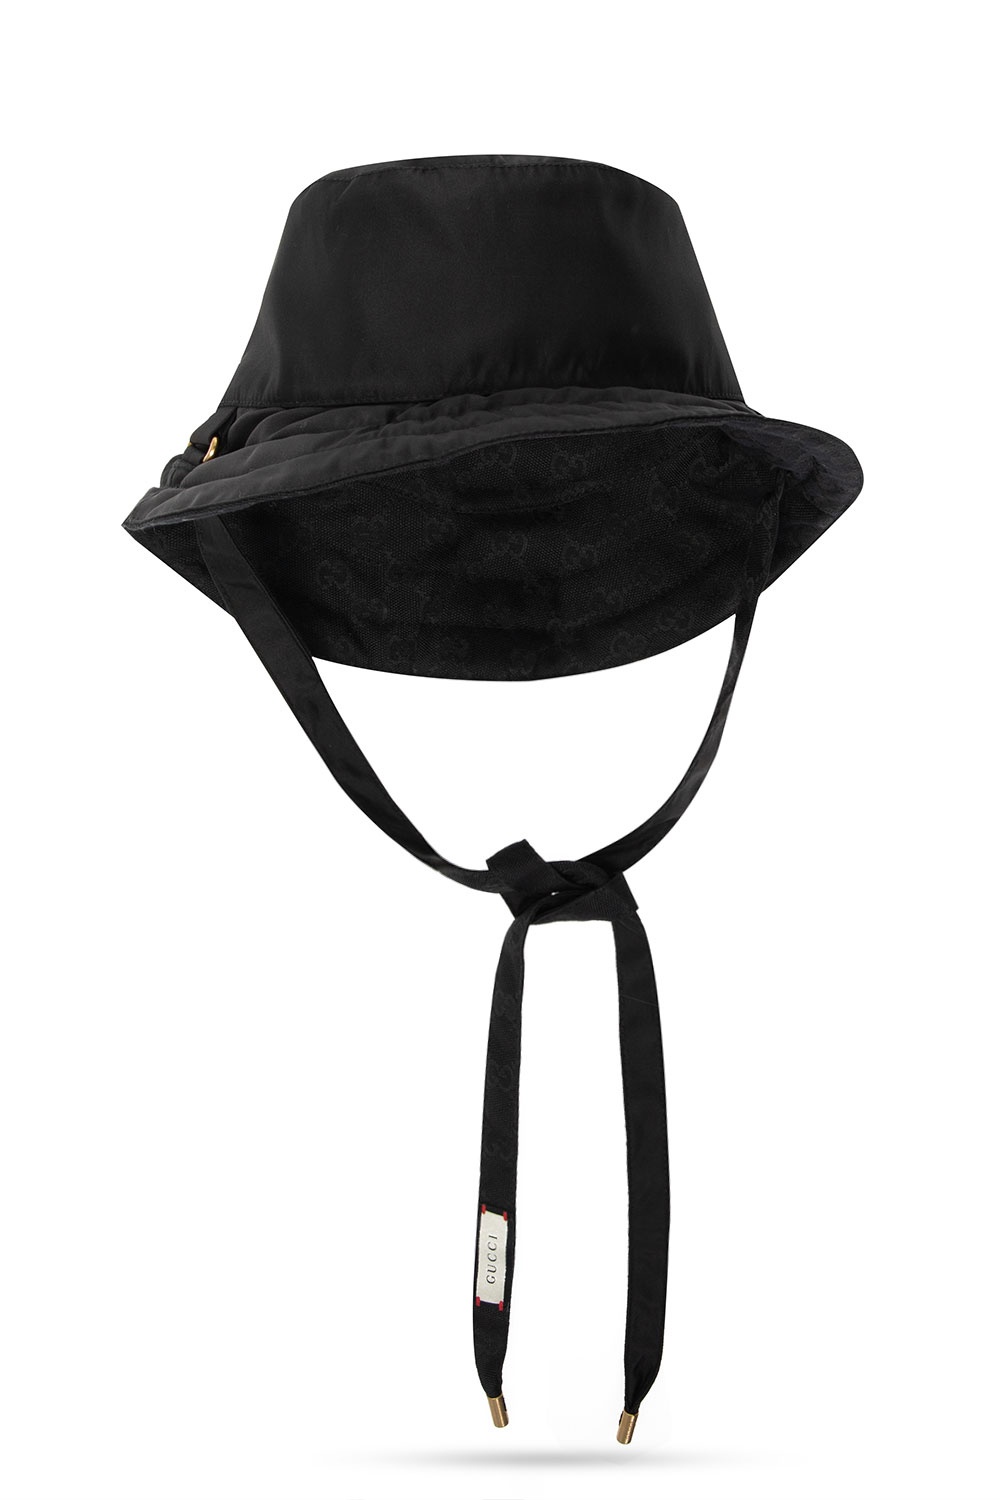 flexfit classic low Bucket Gucci IetpShops with dad logo Nicaragua twill - Black profile - cotton hat cap